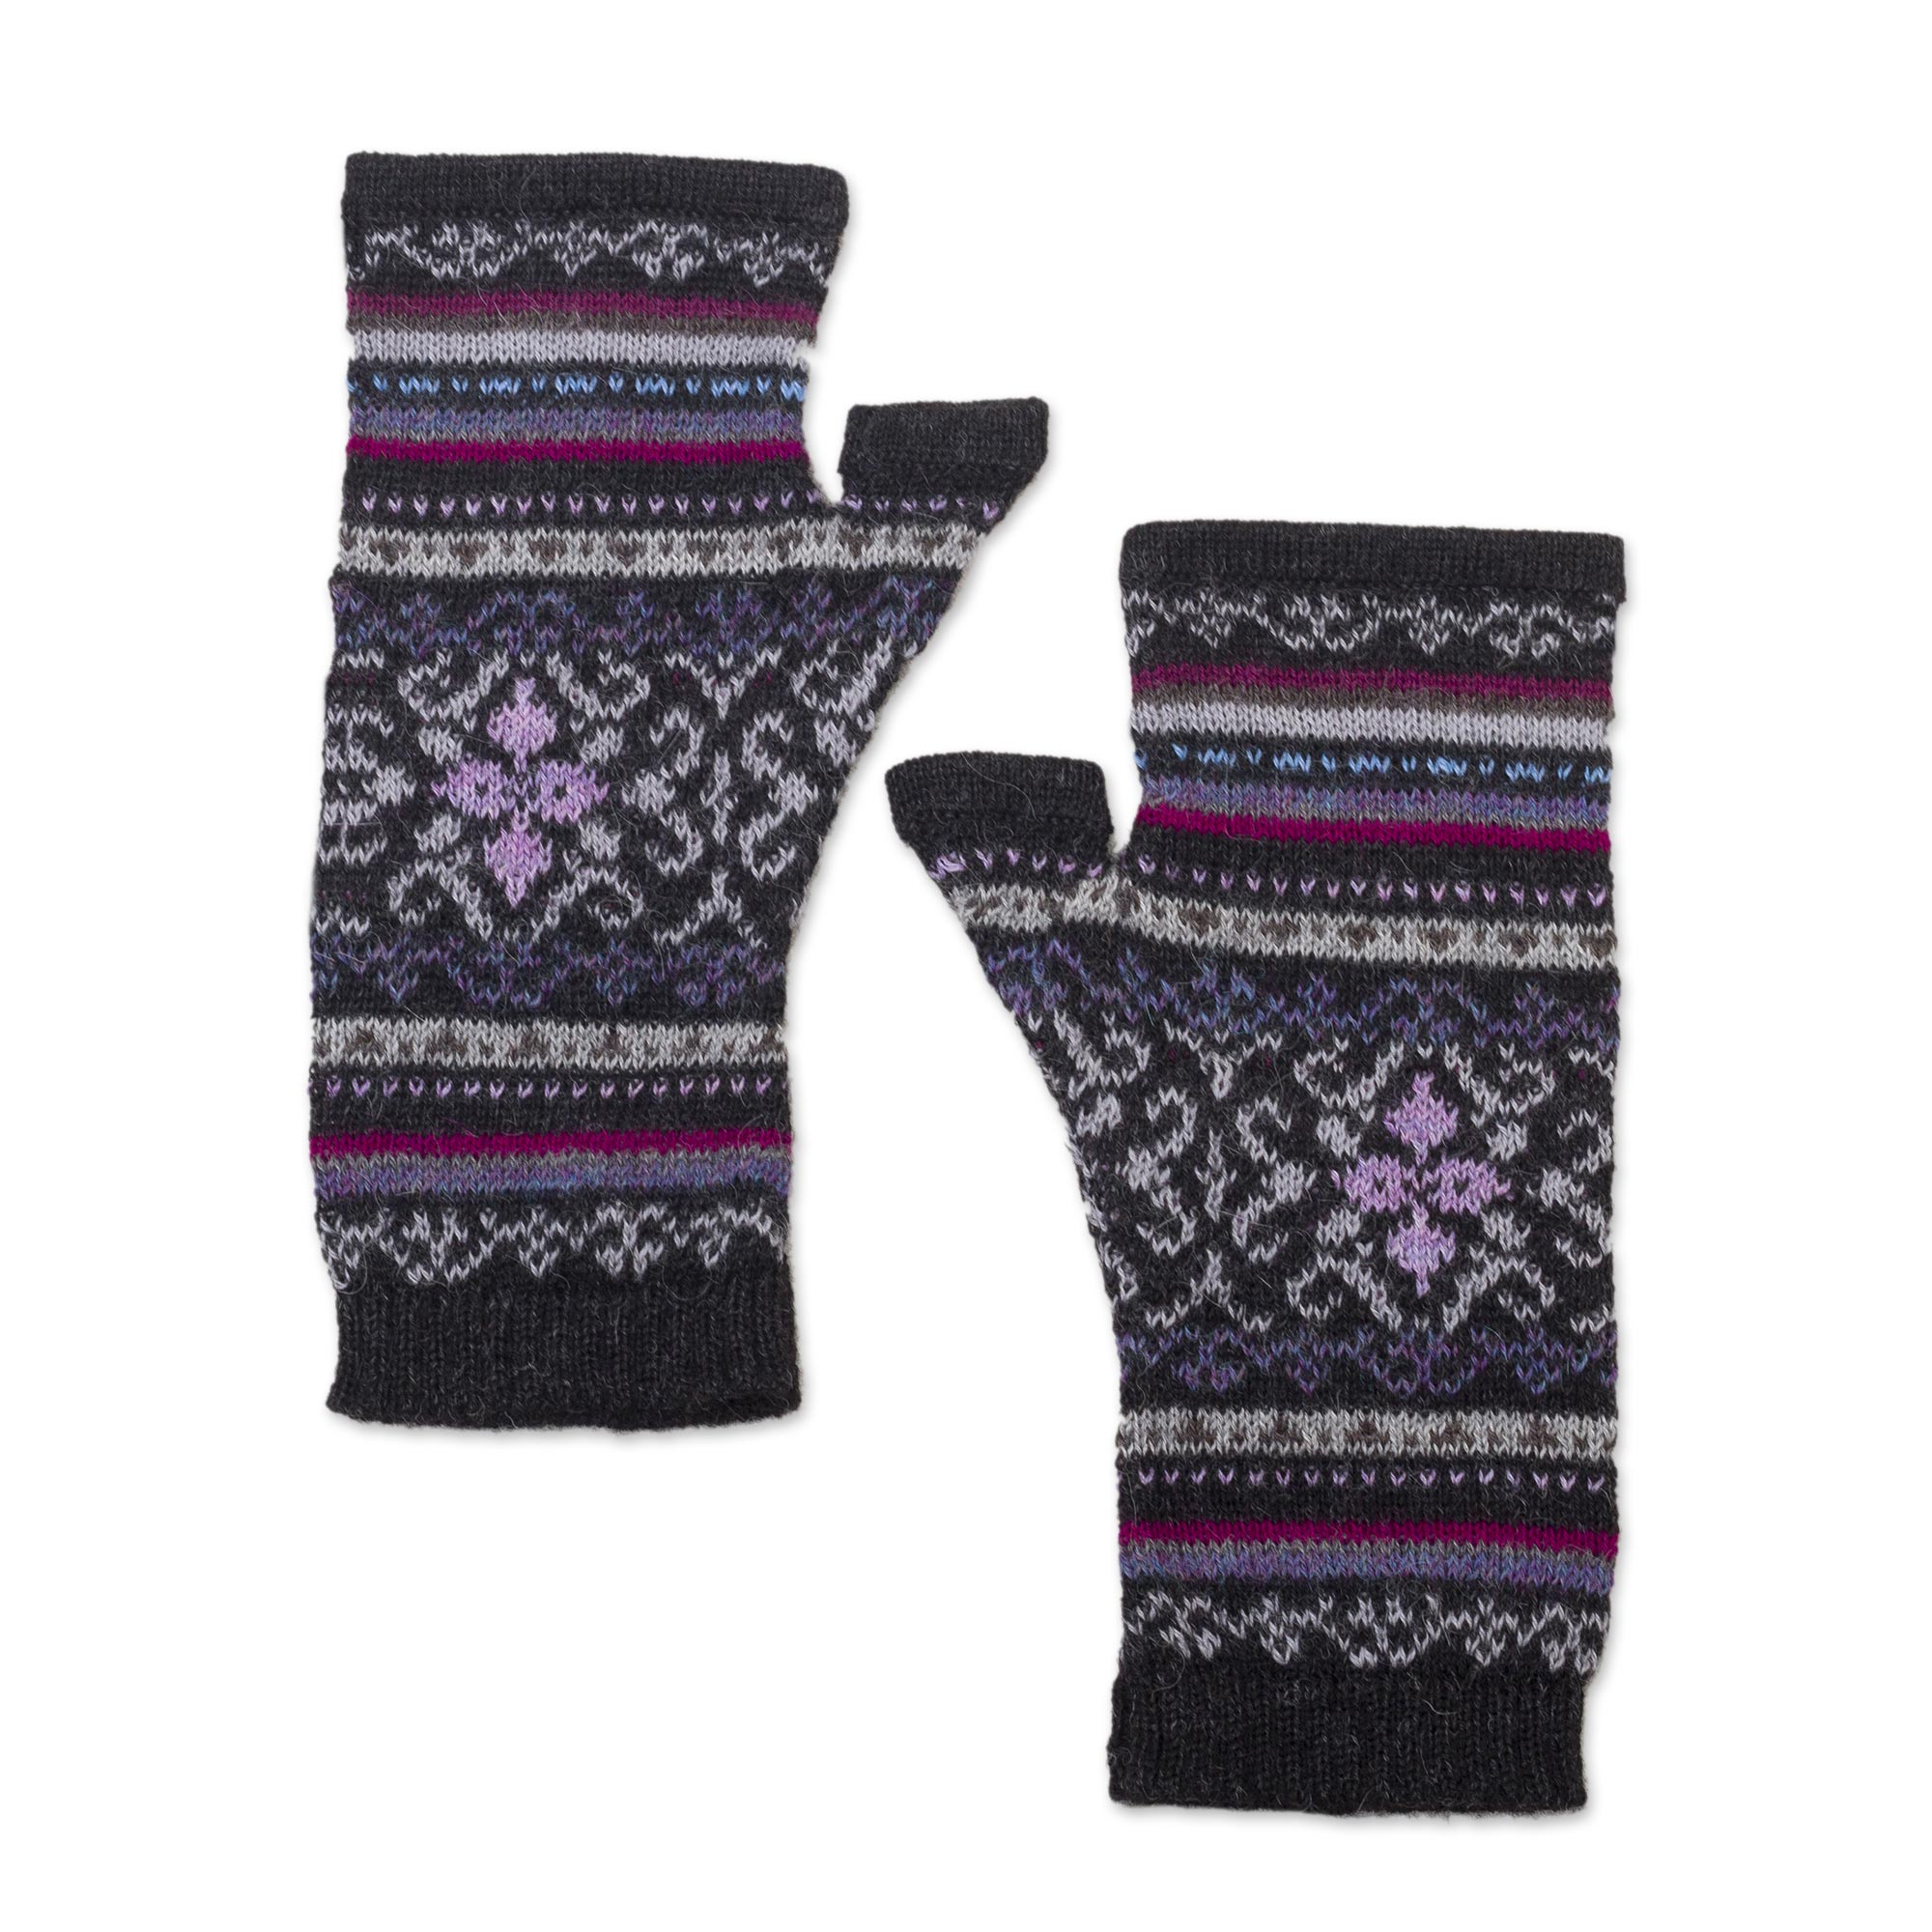 Fingerless Mitts Knit from 100% Alpaca - Sierra Charcoal | NOVICA